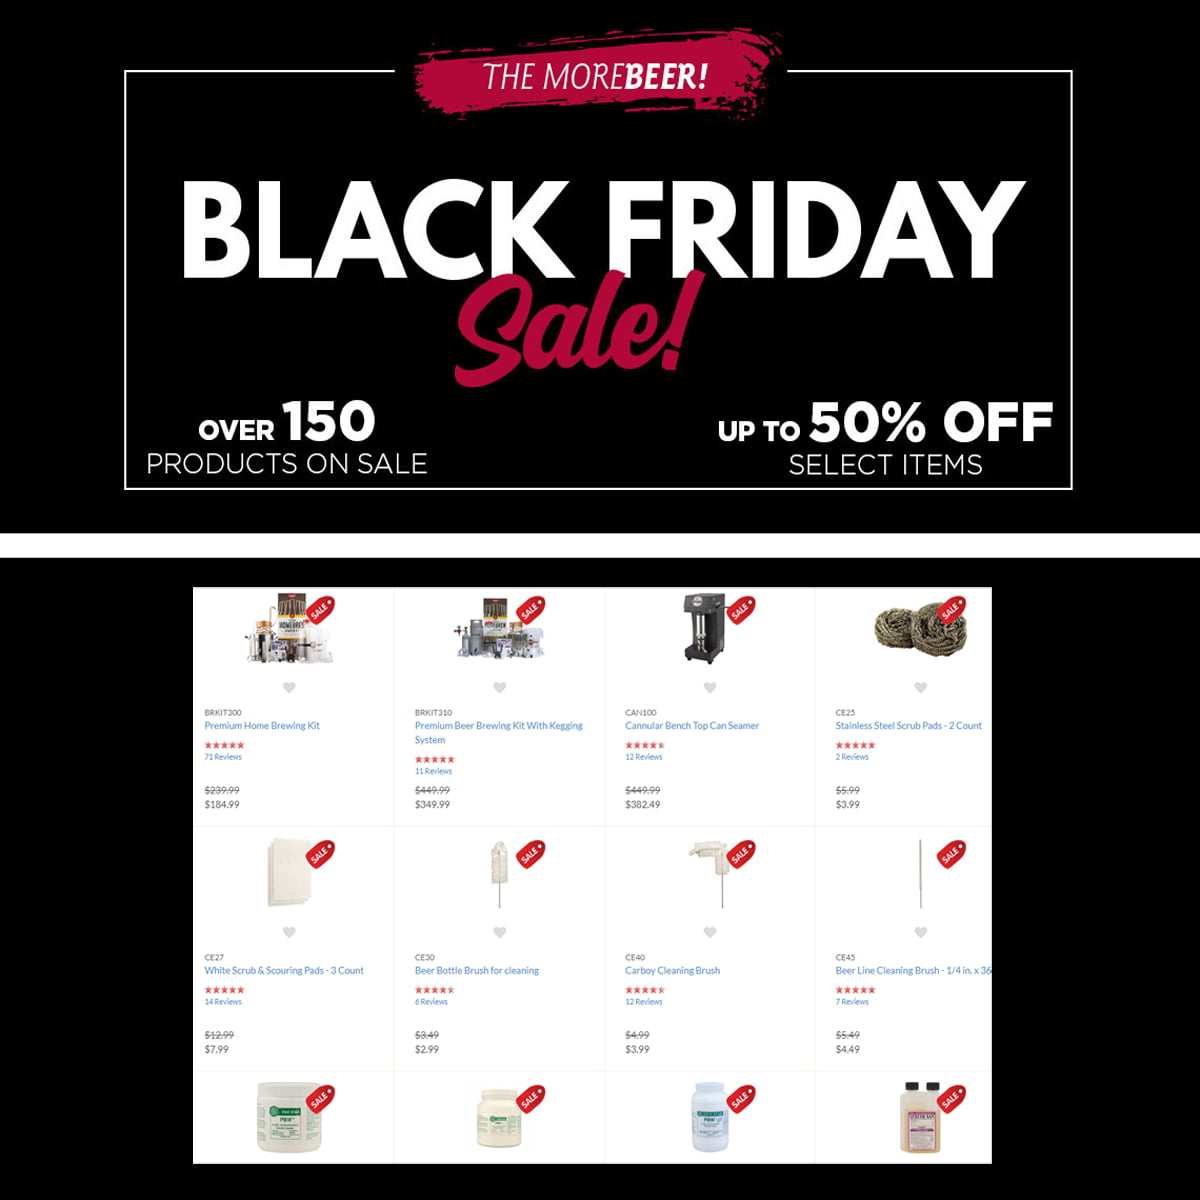 MoreBeer.com Black Friday Sale Promo Code - Save 50%